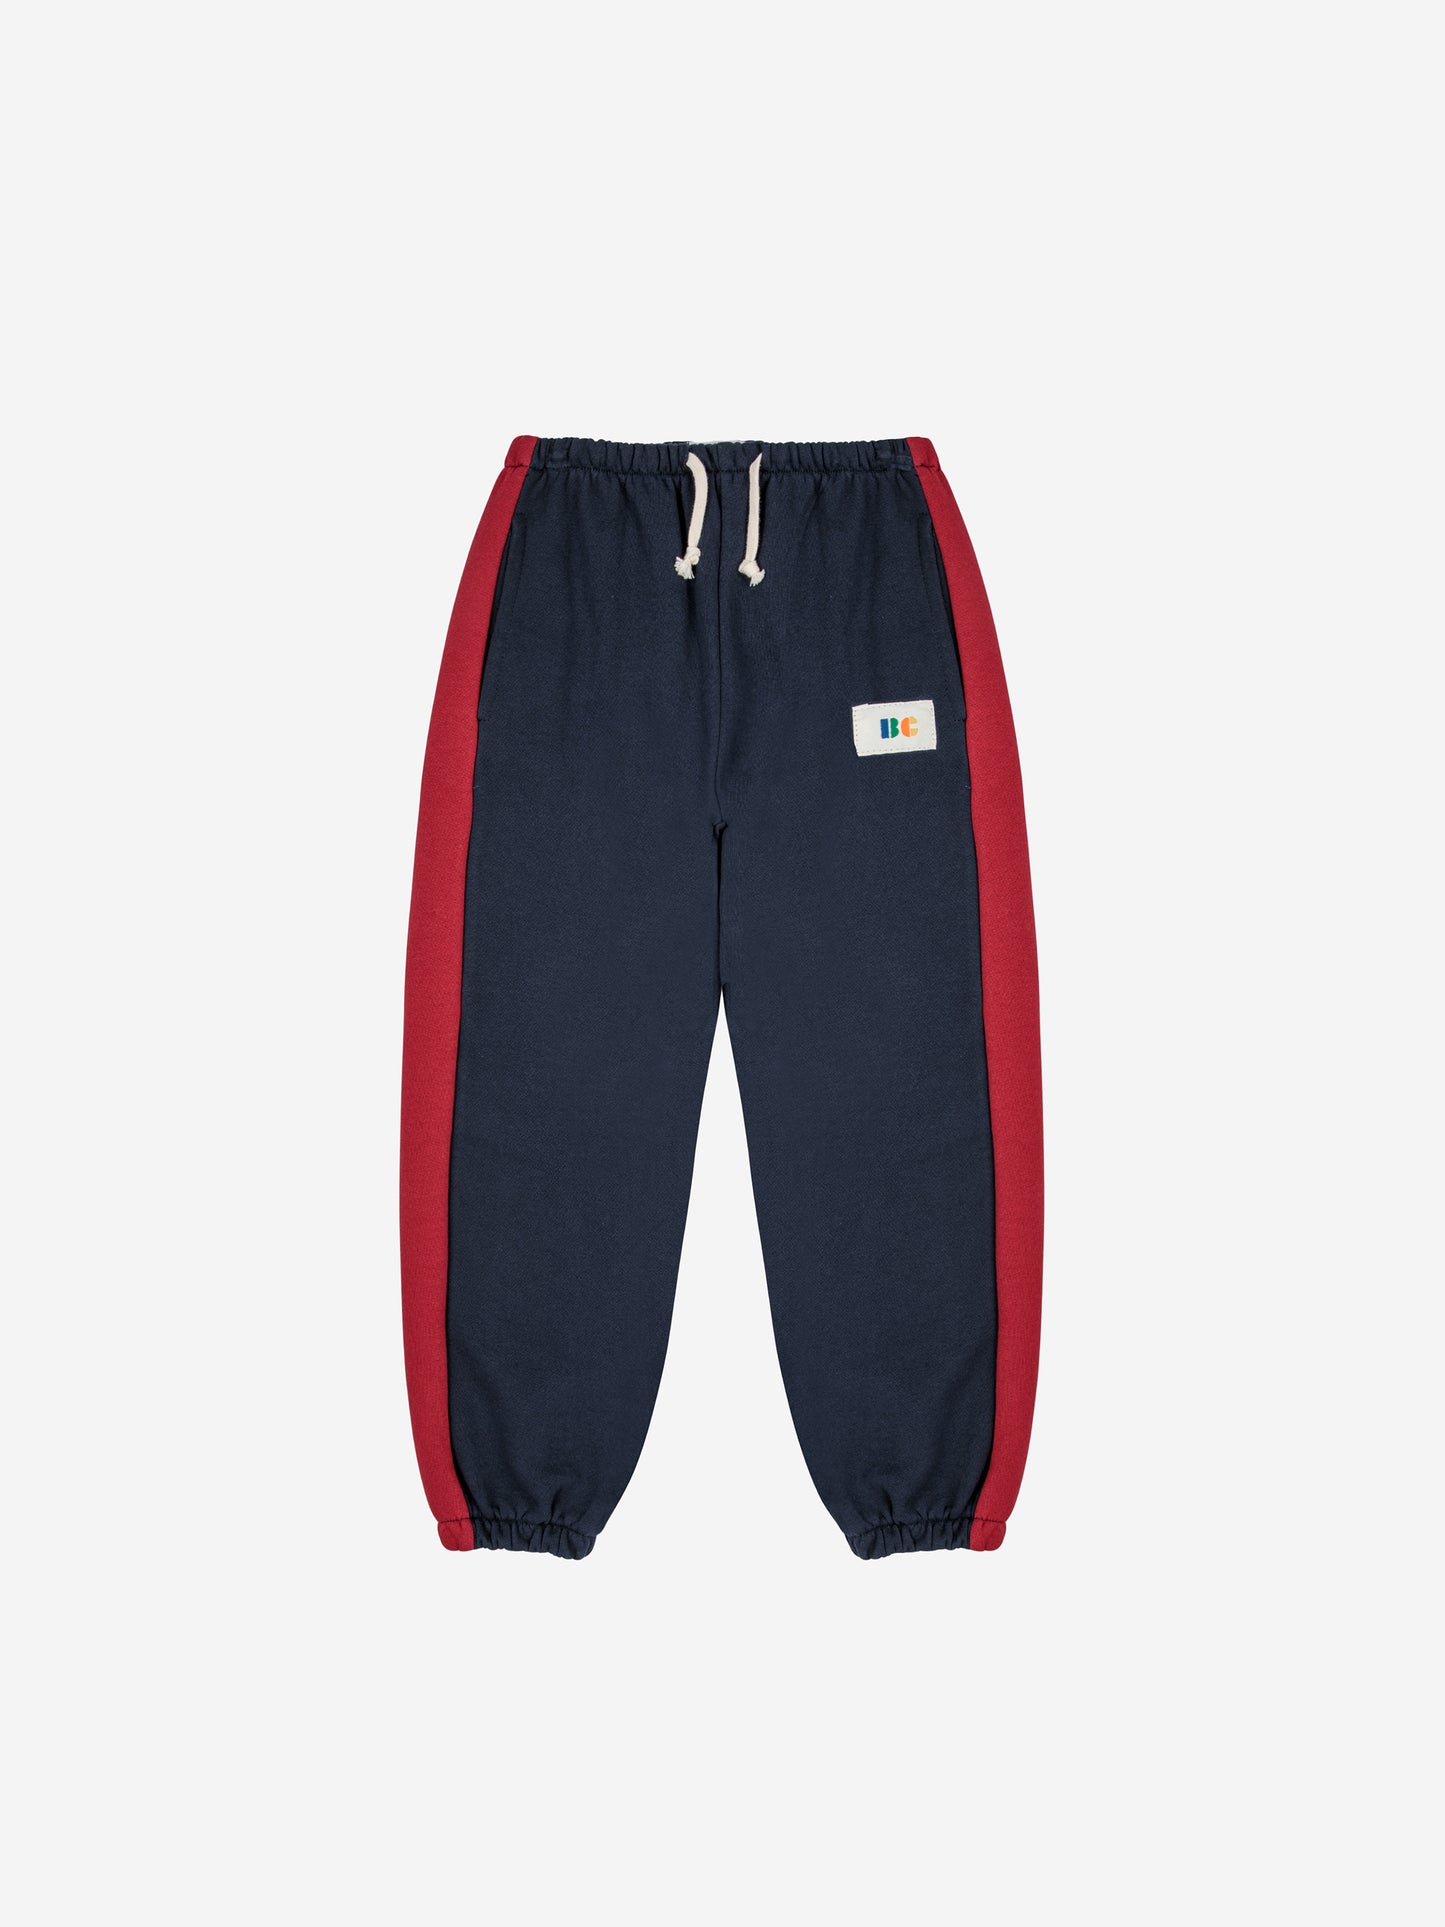 B.C Label Navy jogging pants